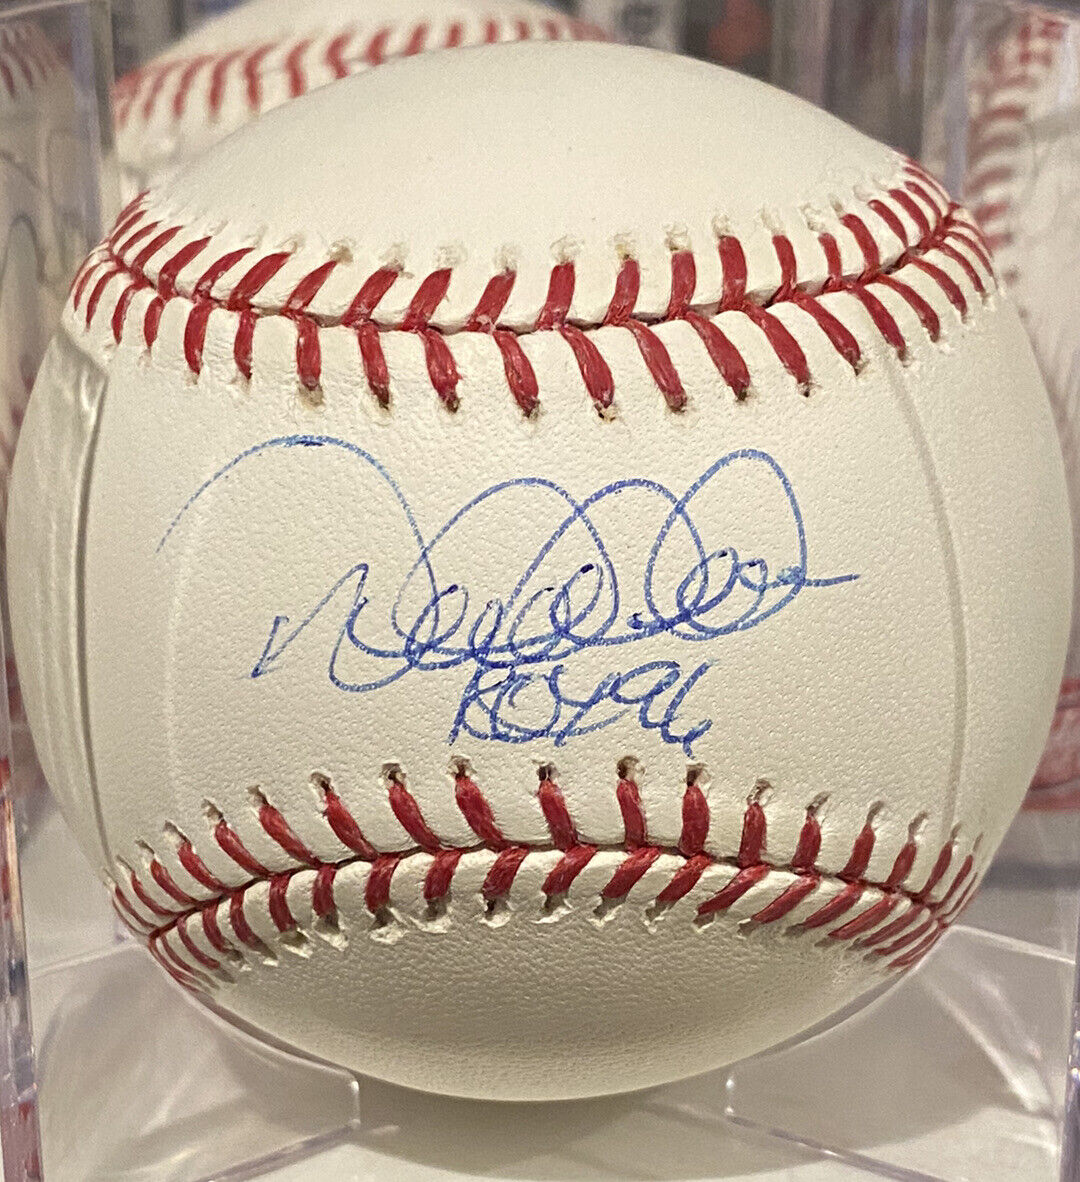 Derek Jeter Autographed MLB Baseball - JSA